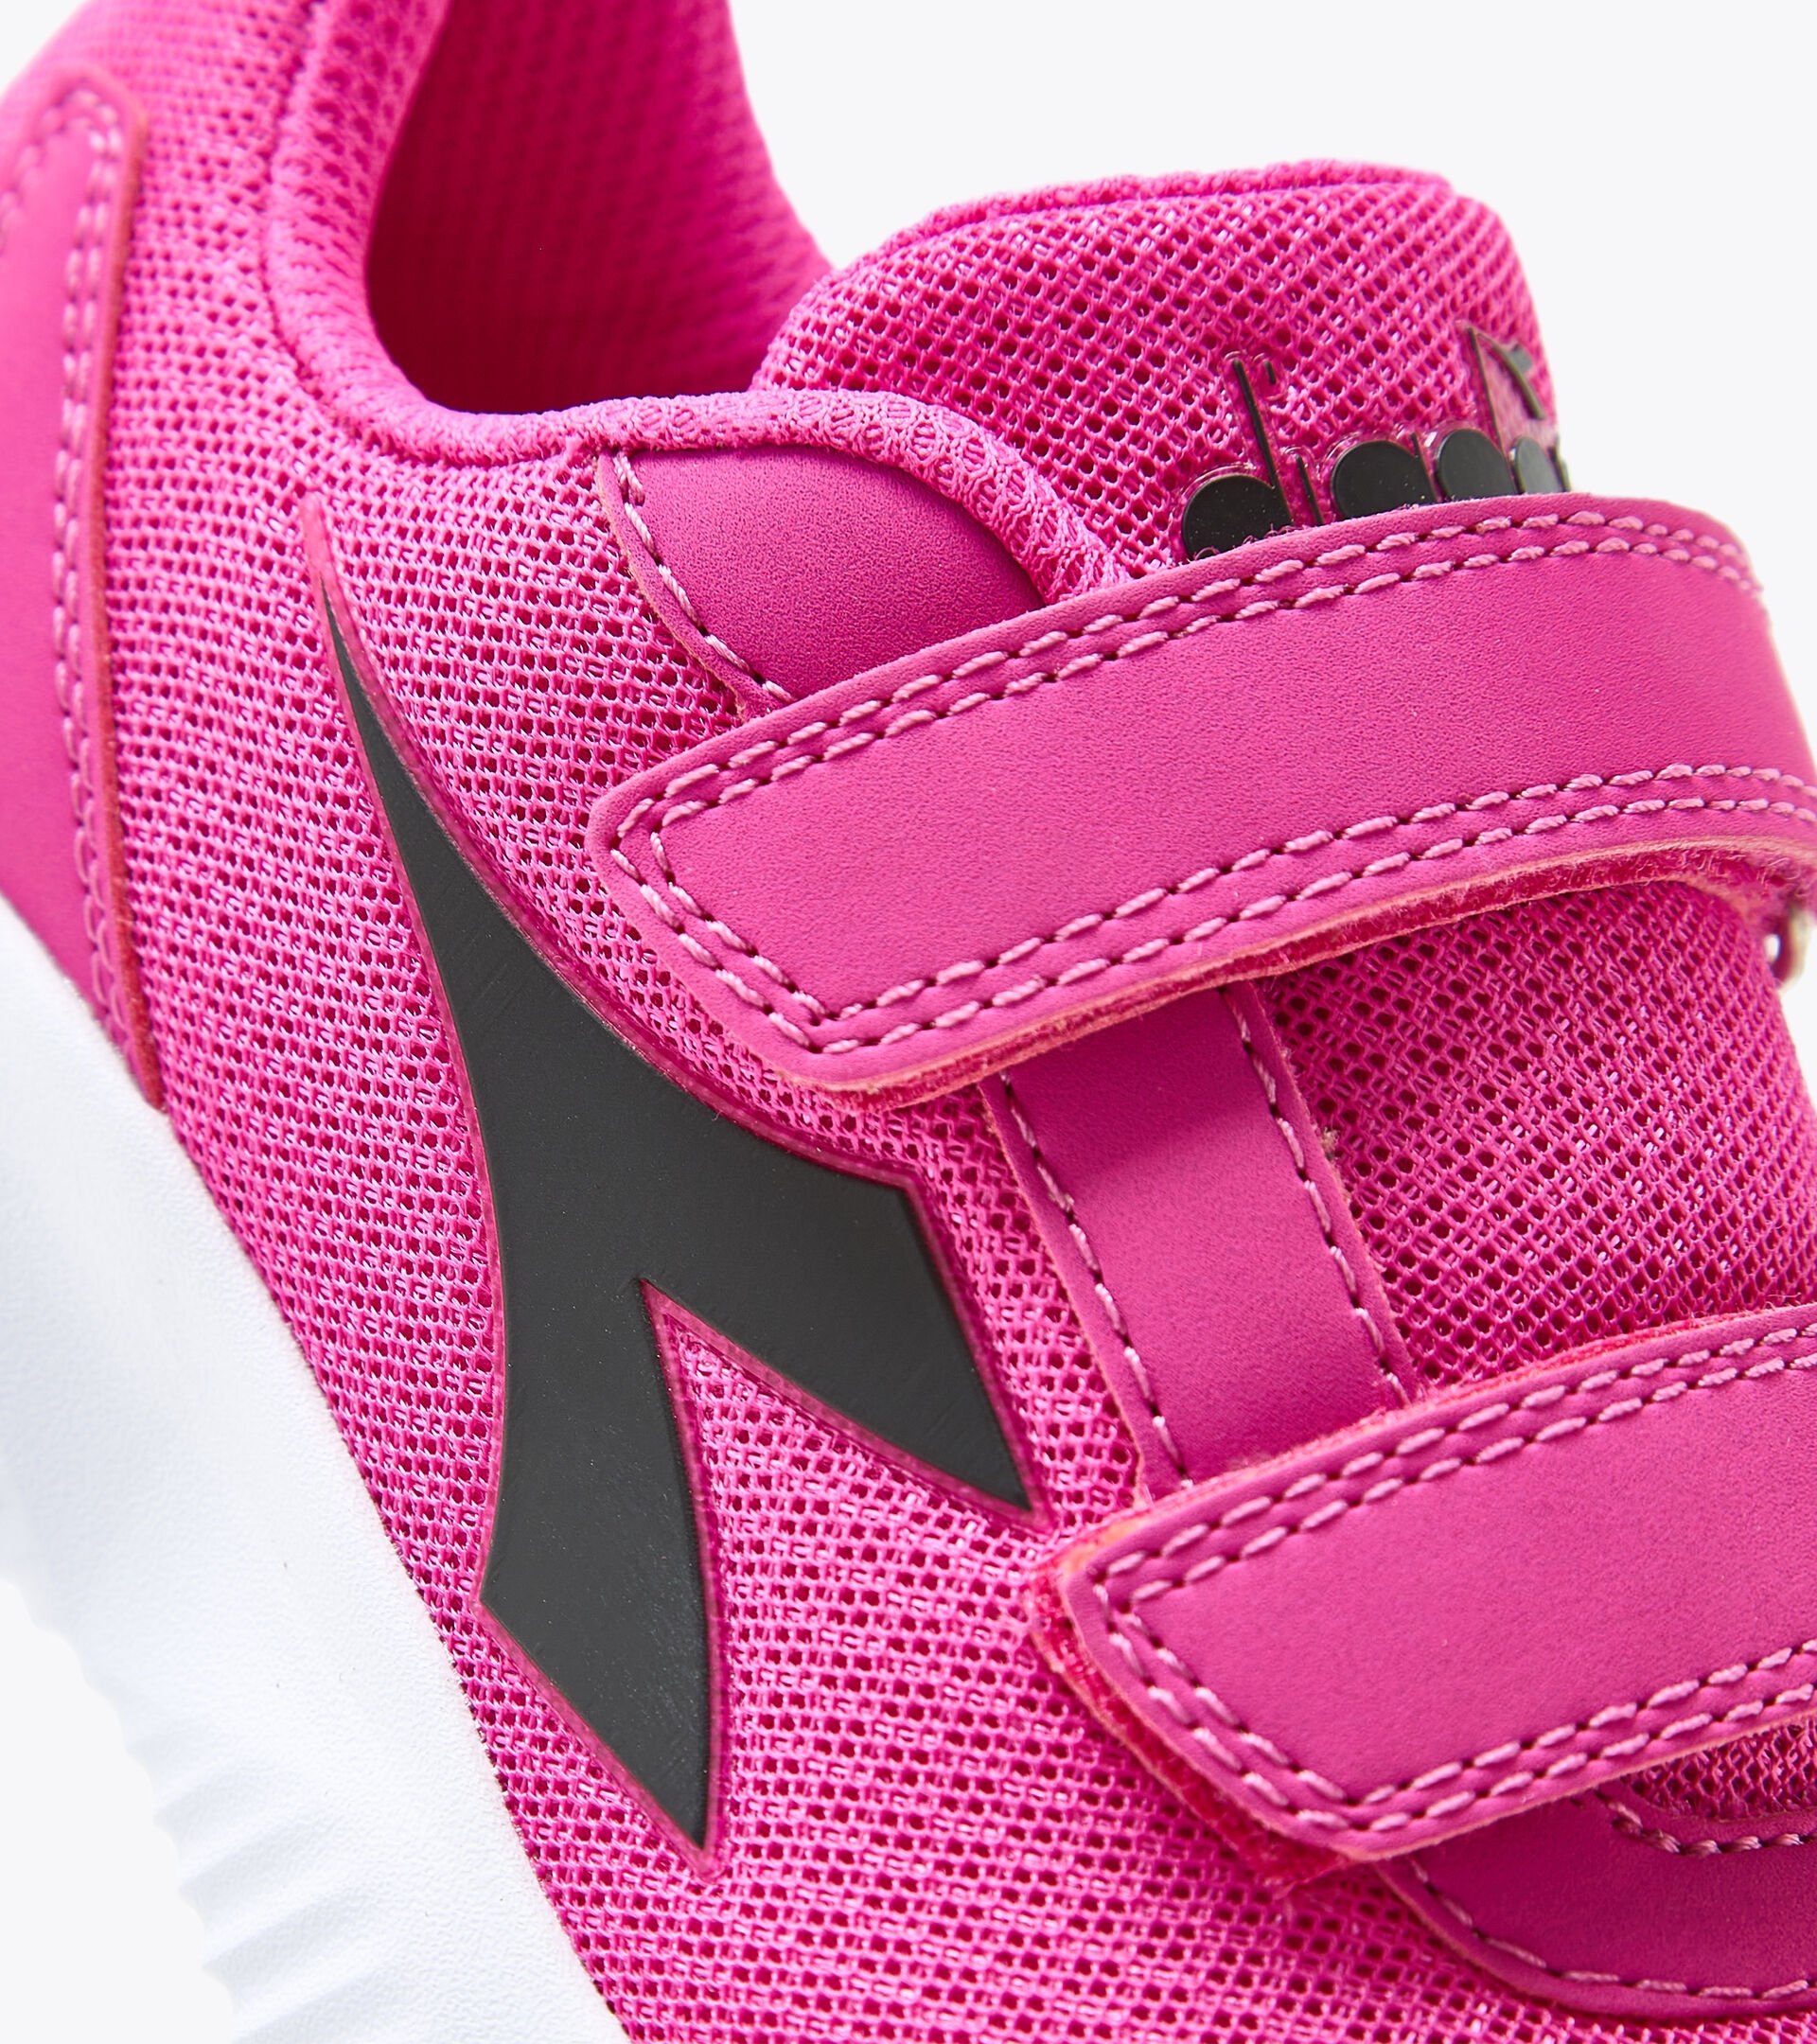 Chaussures de running Junior avec Velcro®- Unisexe ROBIN 3 JR V RHODAMINE ROUGE C /BLANC - Diadora